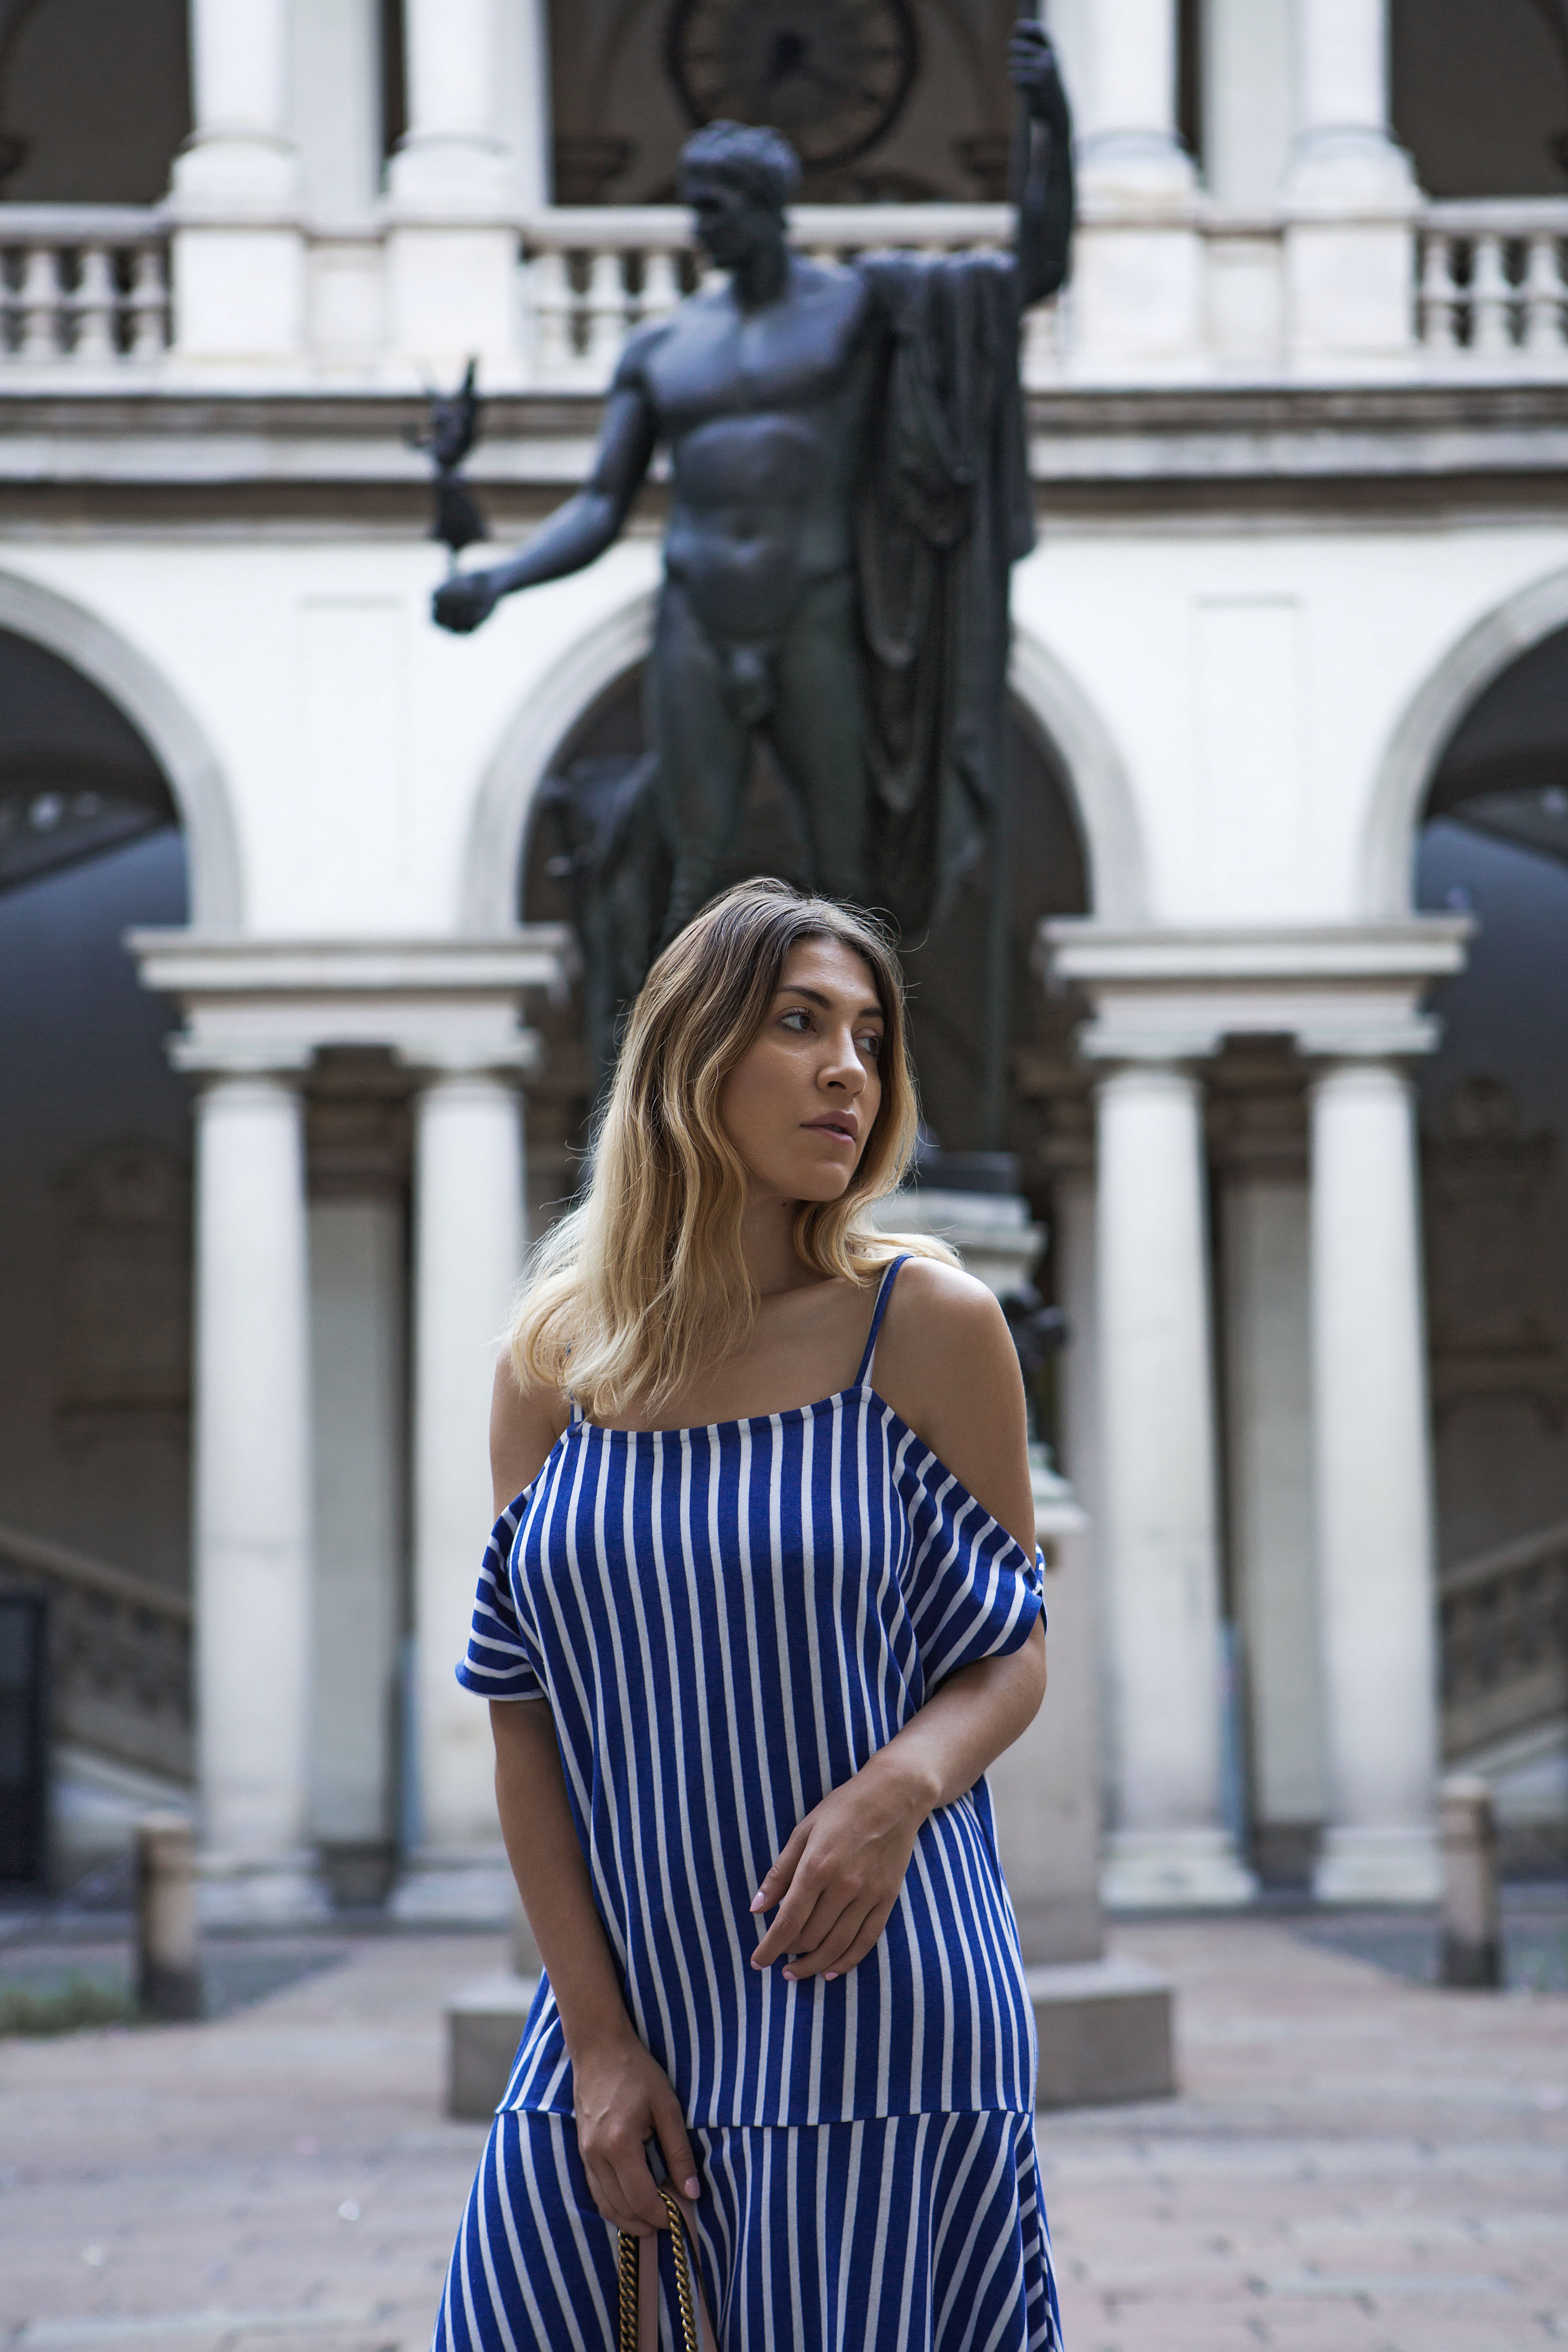 Blue-Dress-Milan_-8 Blue Striped Midi Dress in Milan